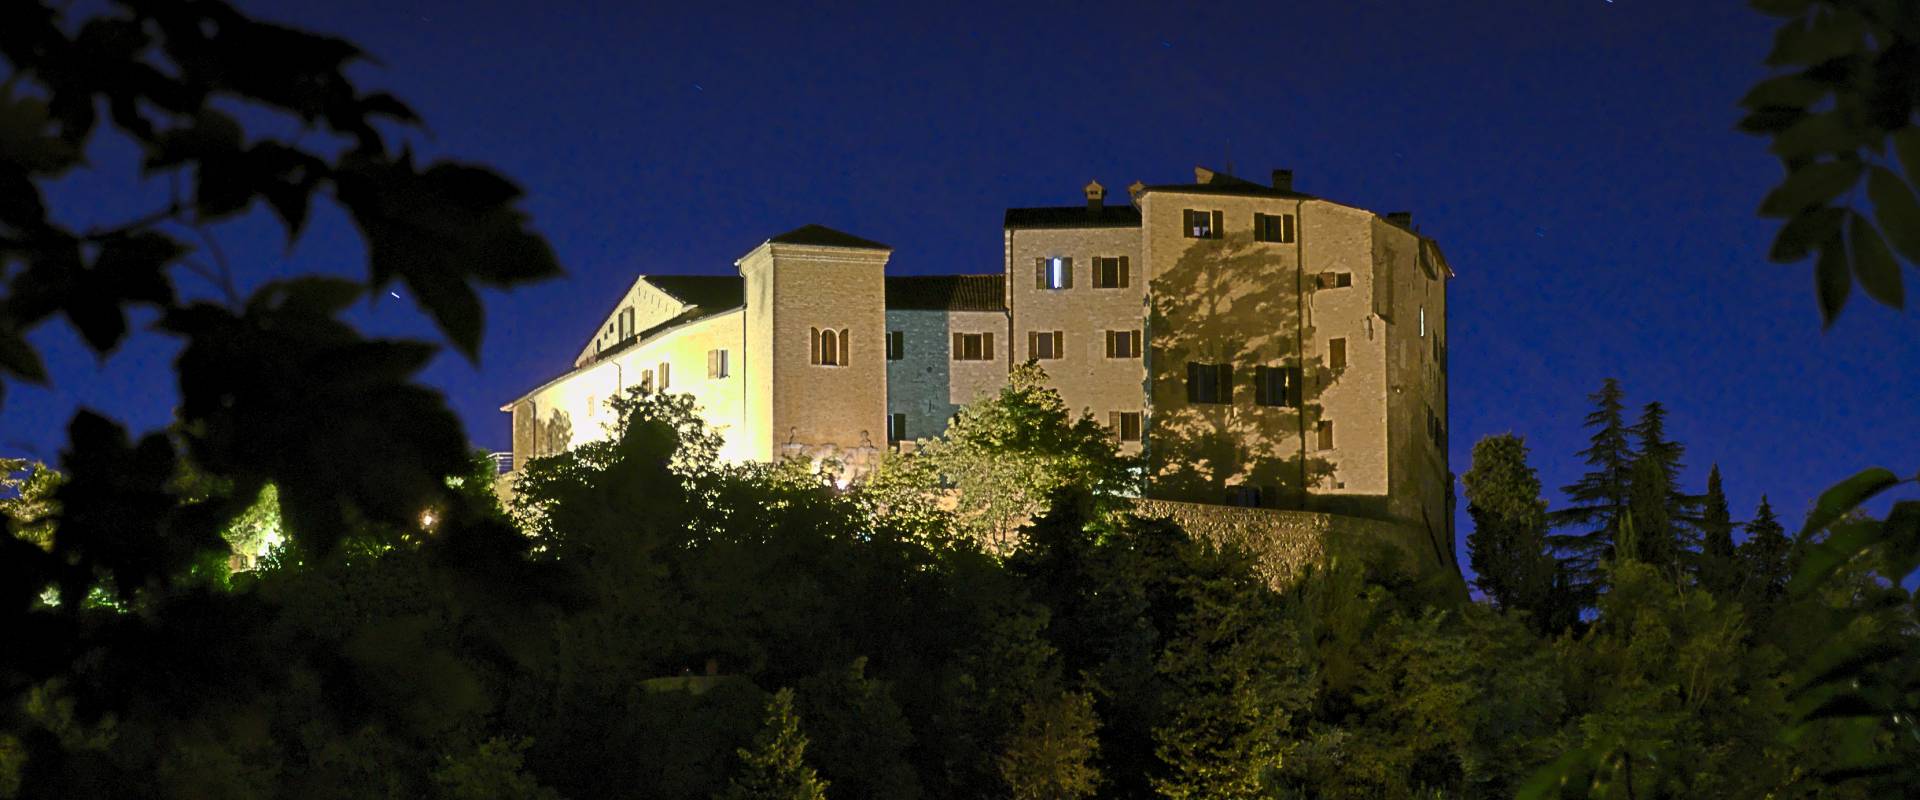 Rocca di Bertinoro by Night foto di Wikitechphoto